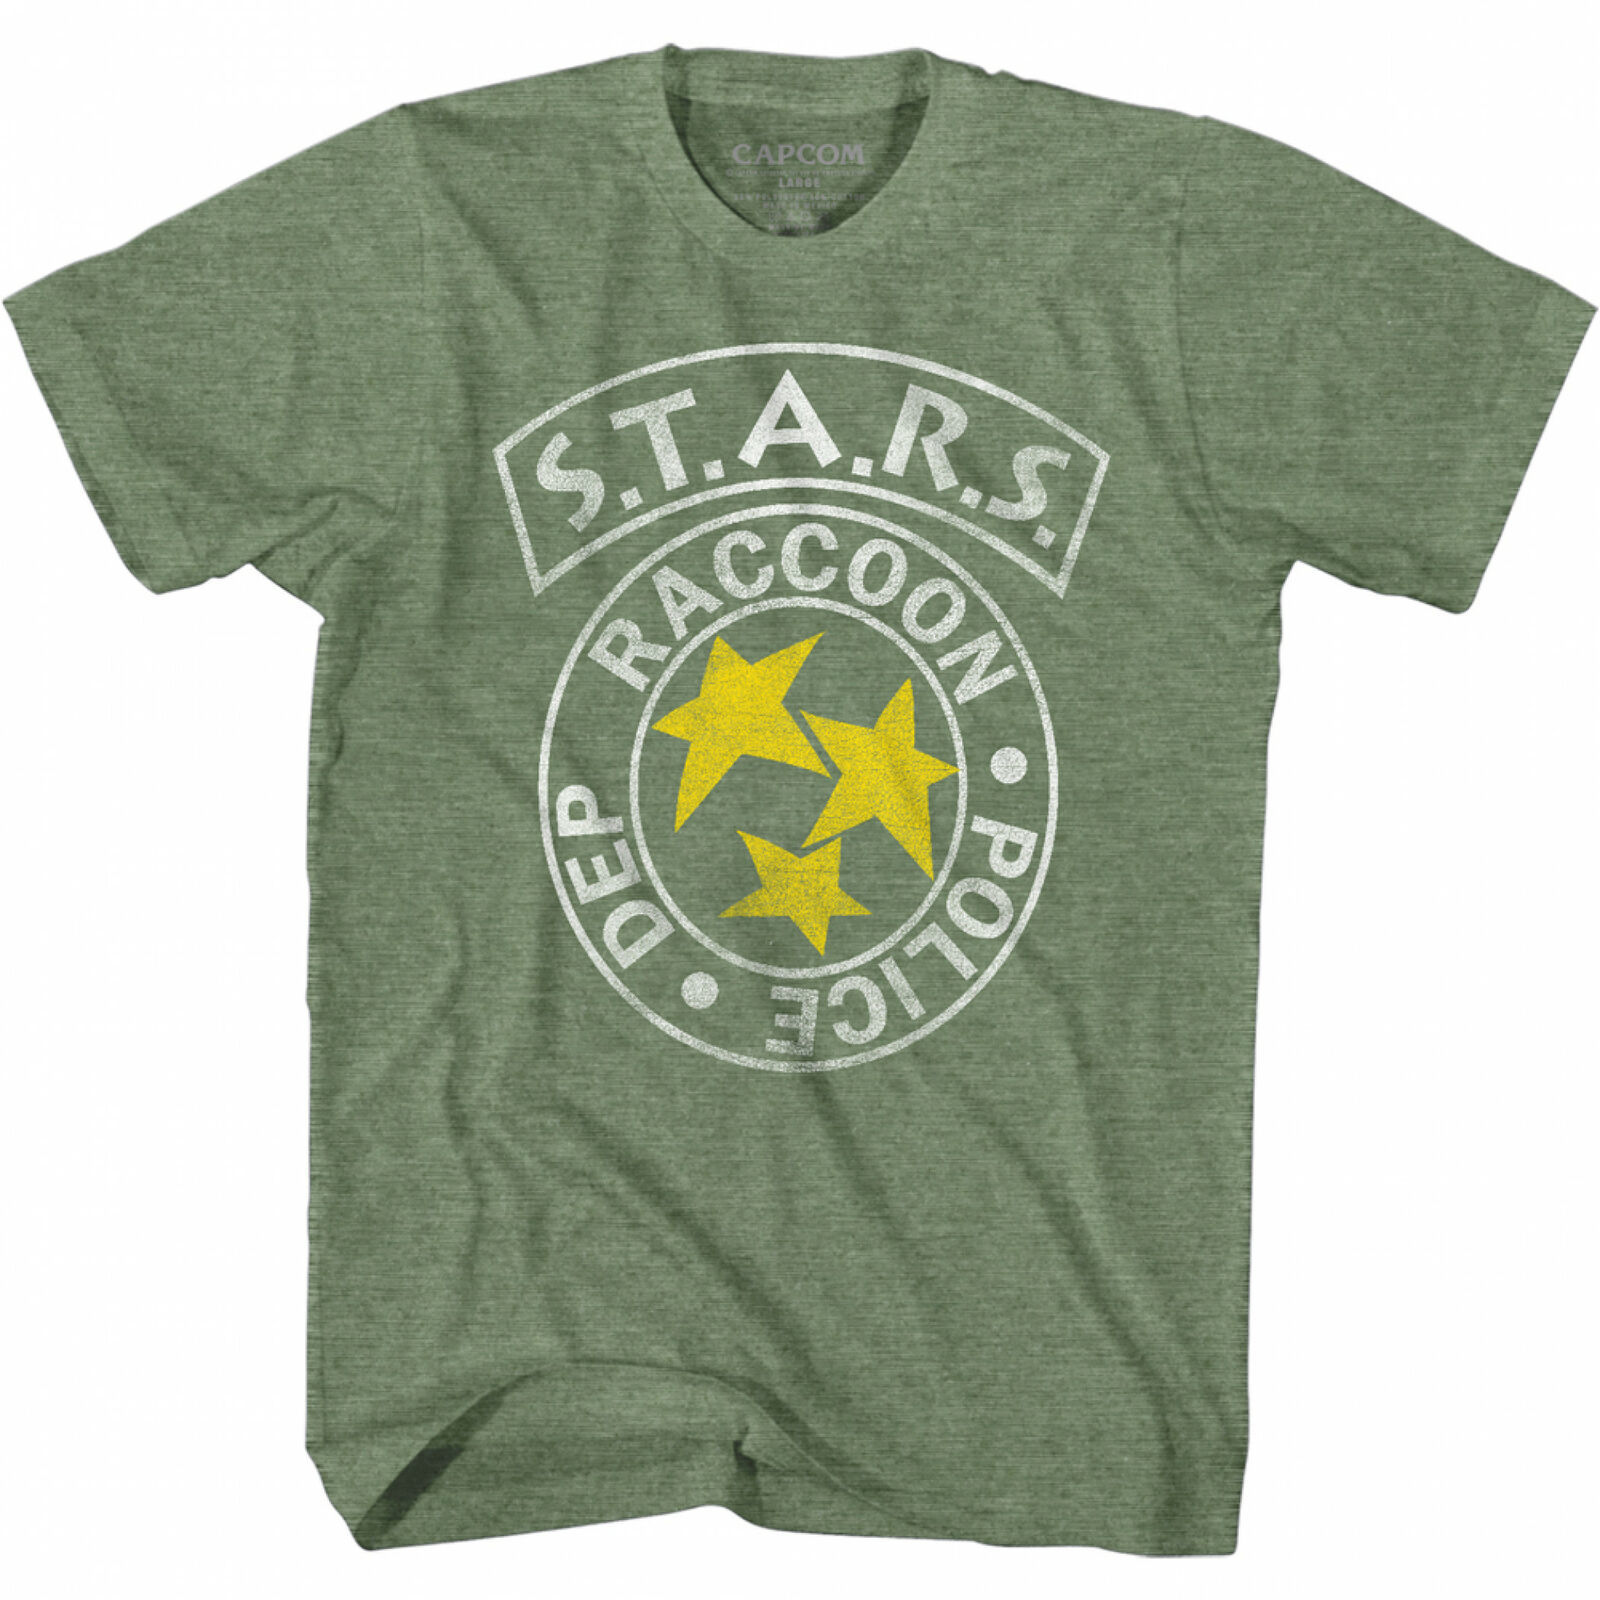 Resident Evil STARS Racoon City Police T-Shirt Green - $28.98 - $30.98